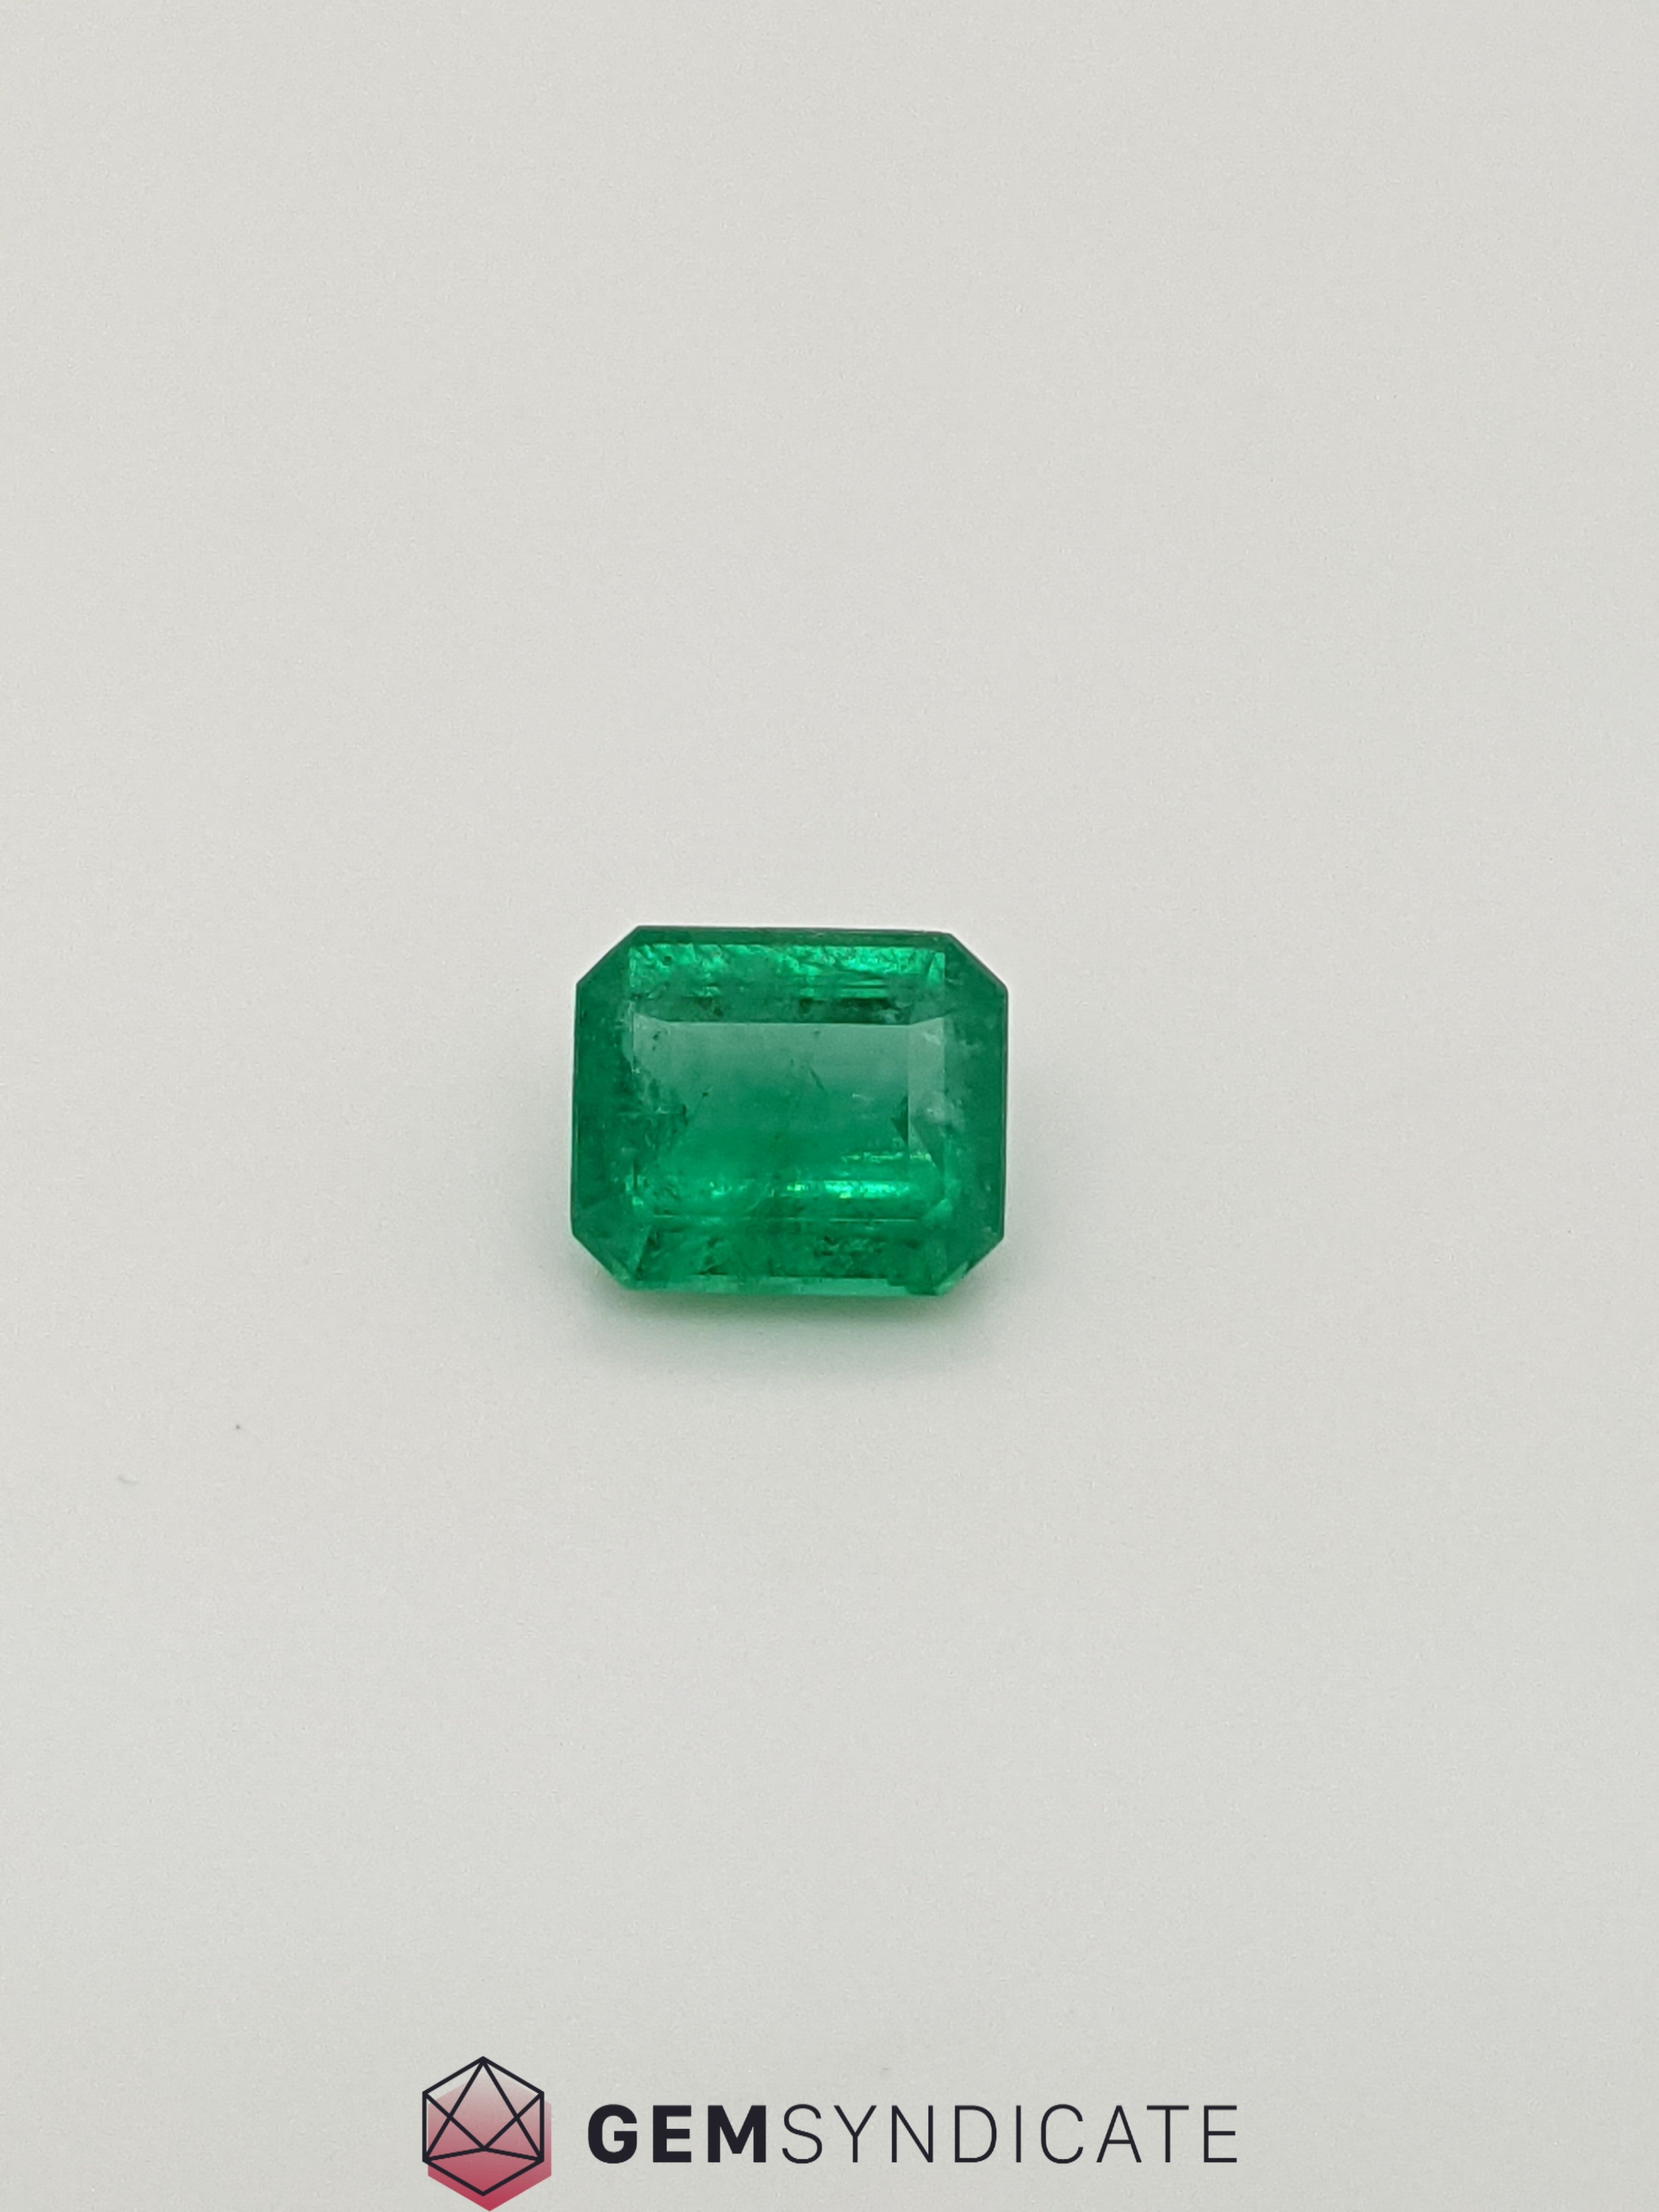 Luxuriant Emerald Cut Green Emerald 1.42ct